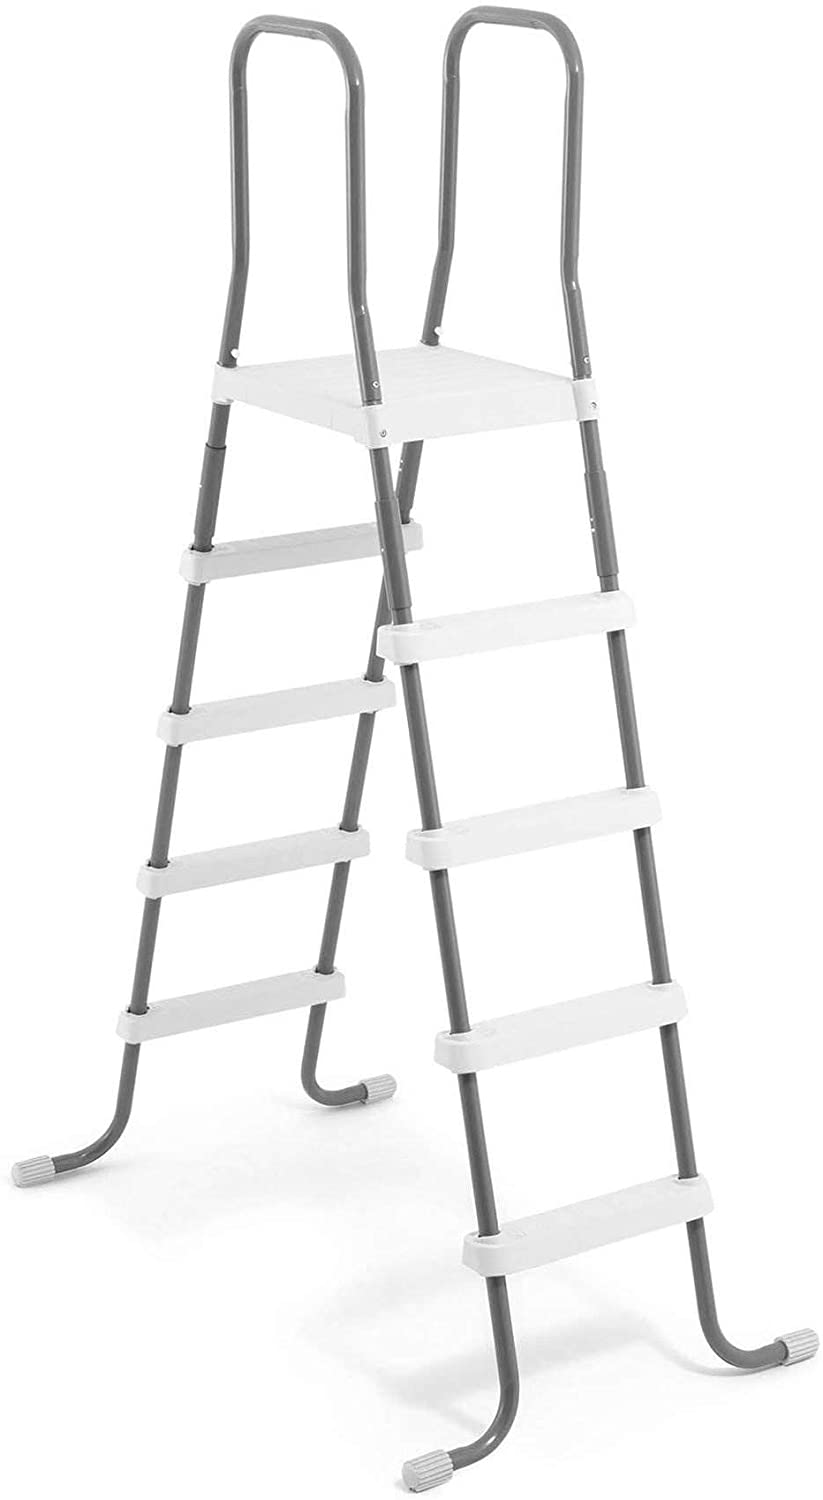 Intex Steel Frame Above Ground Swimming Pool Ladder